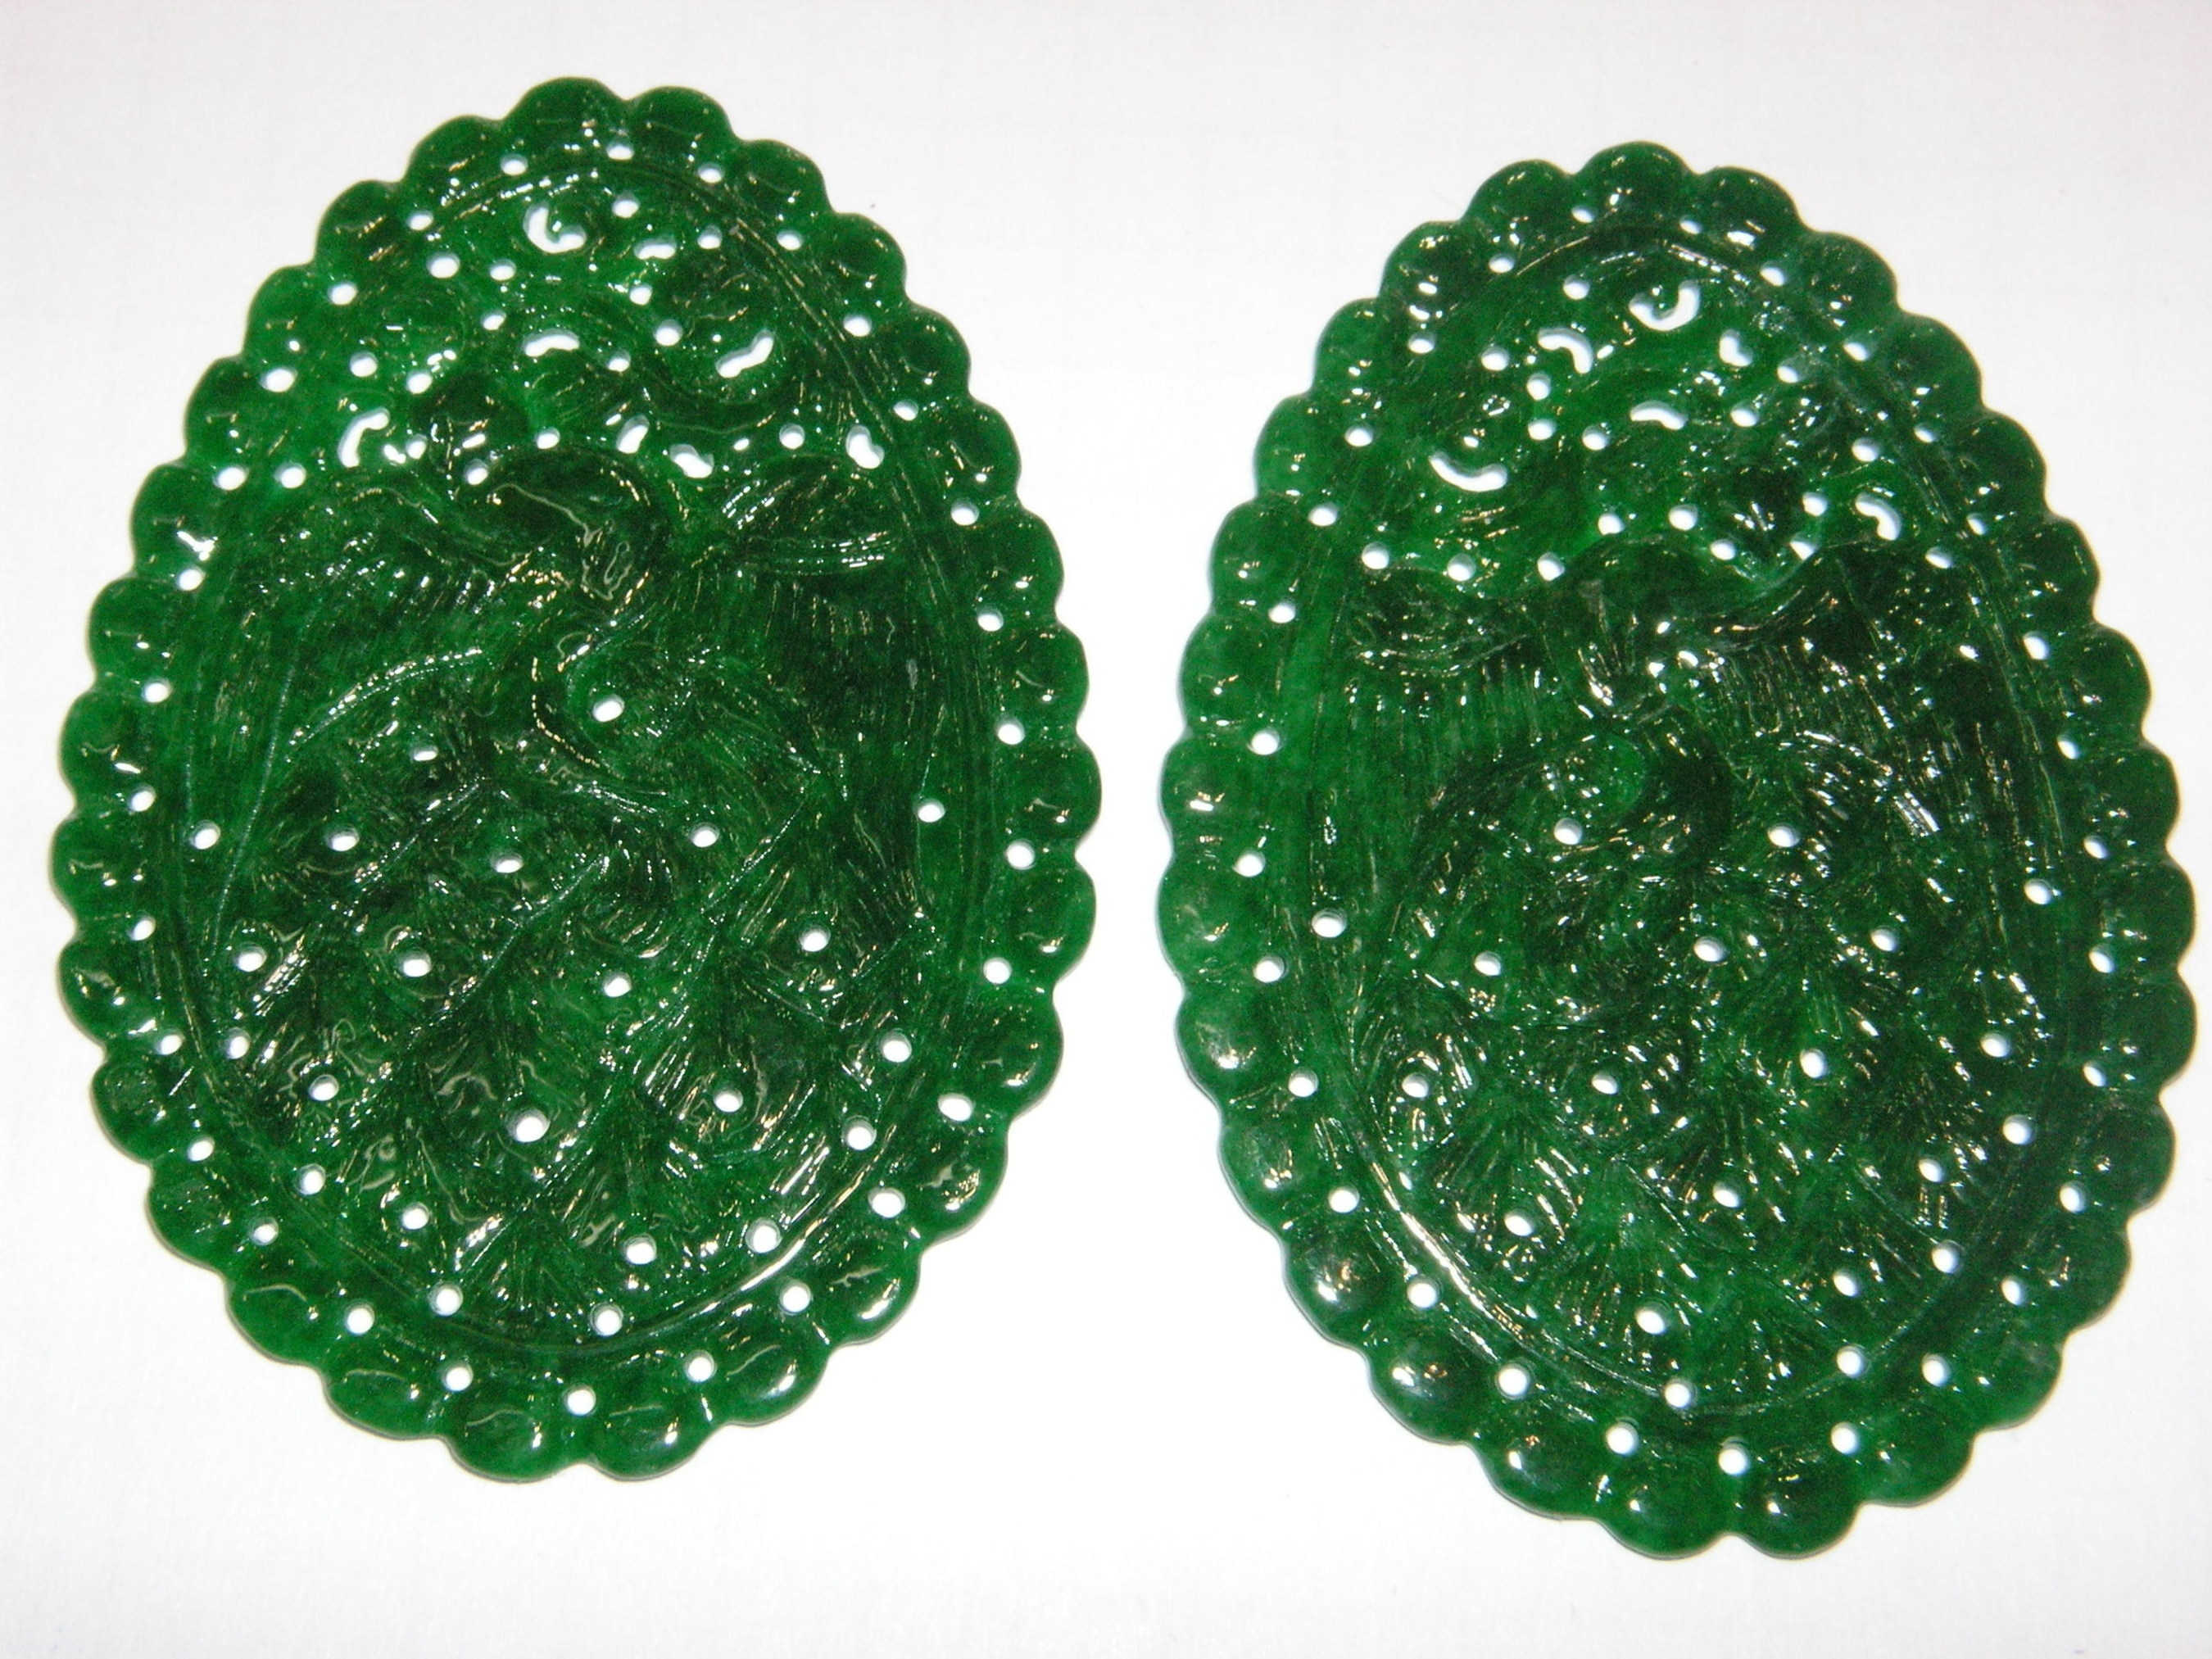 Burma Jade; Jeweller: Iran Tuerkis (Austria), International, Booth L112  Price on Ask